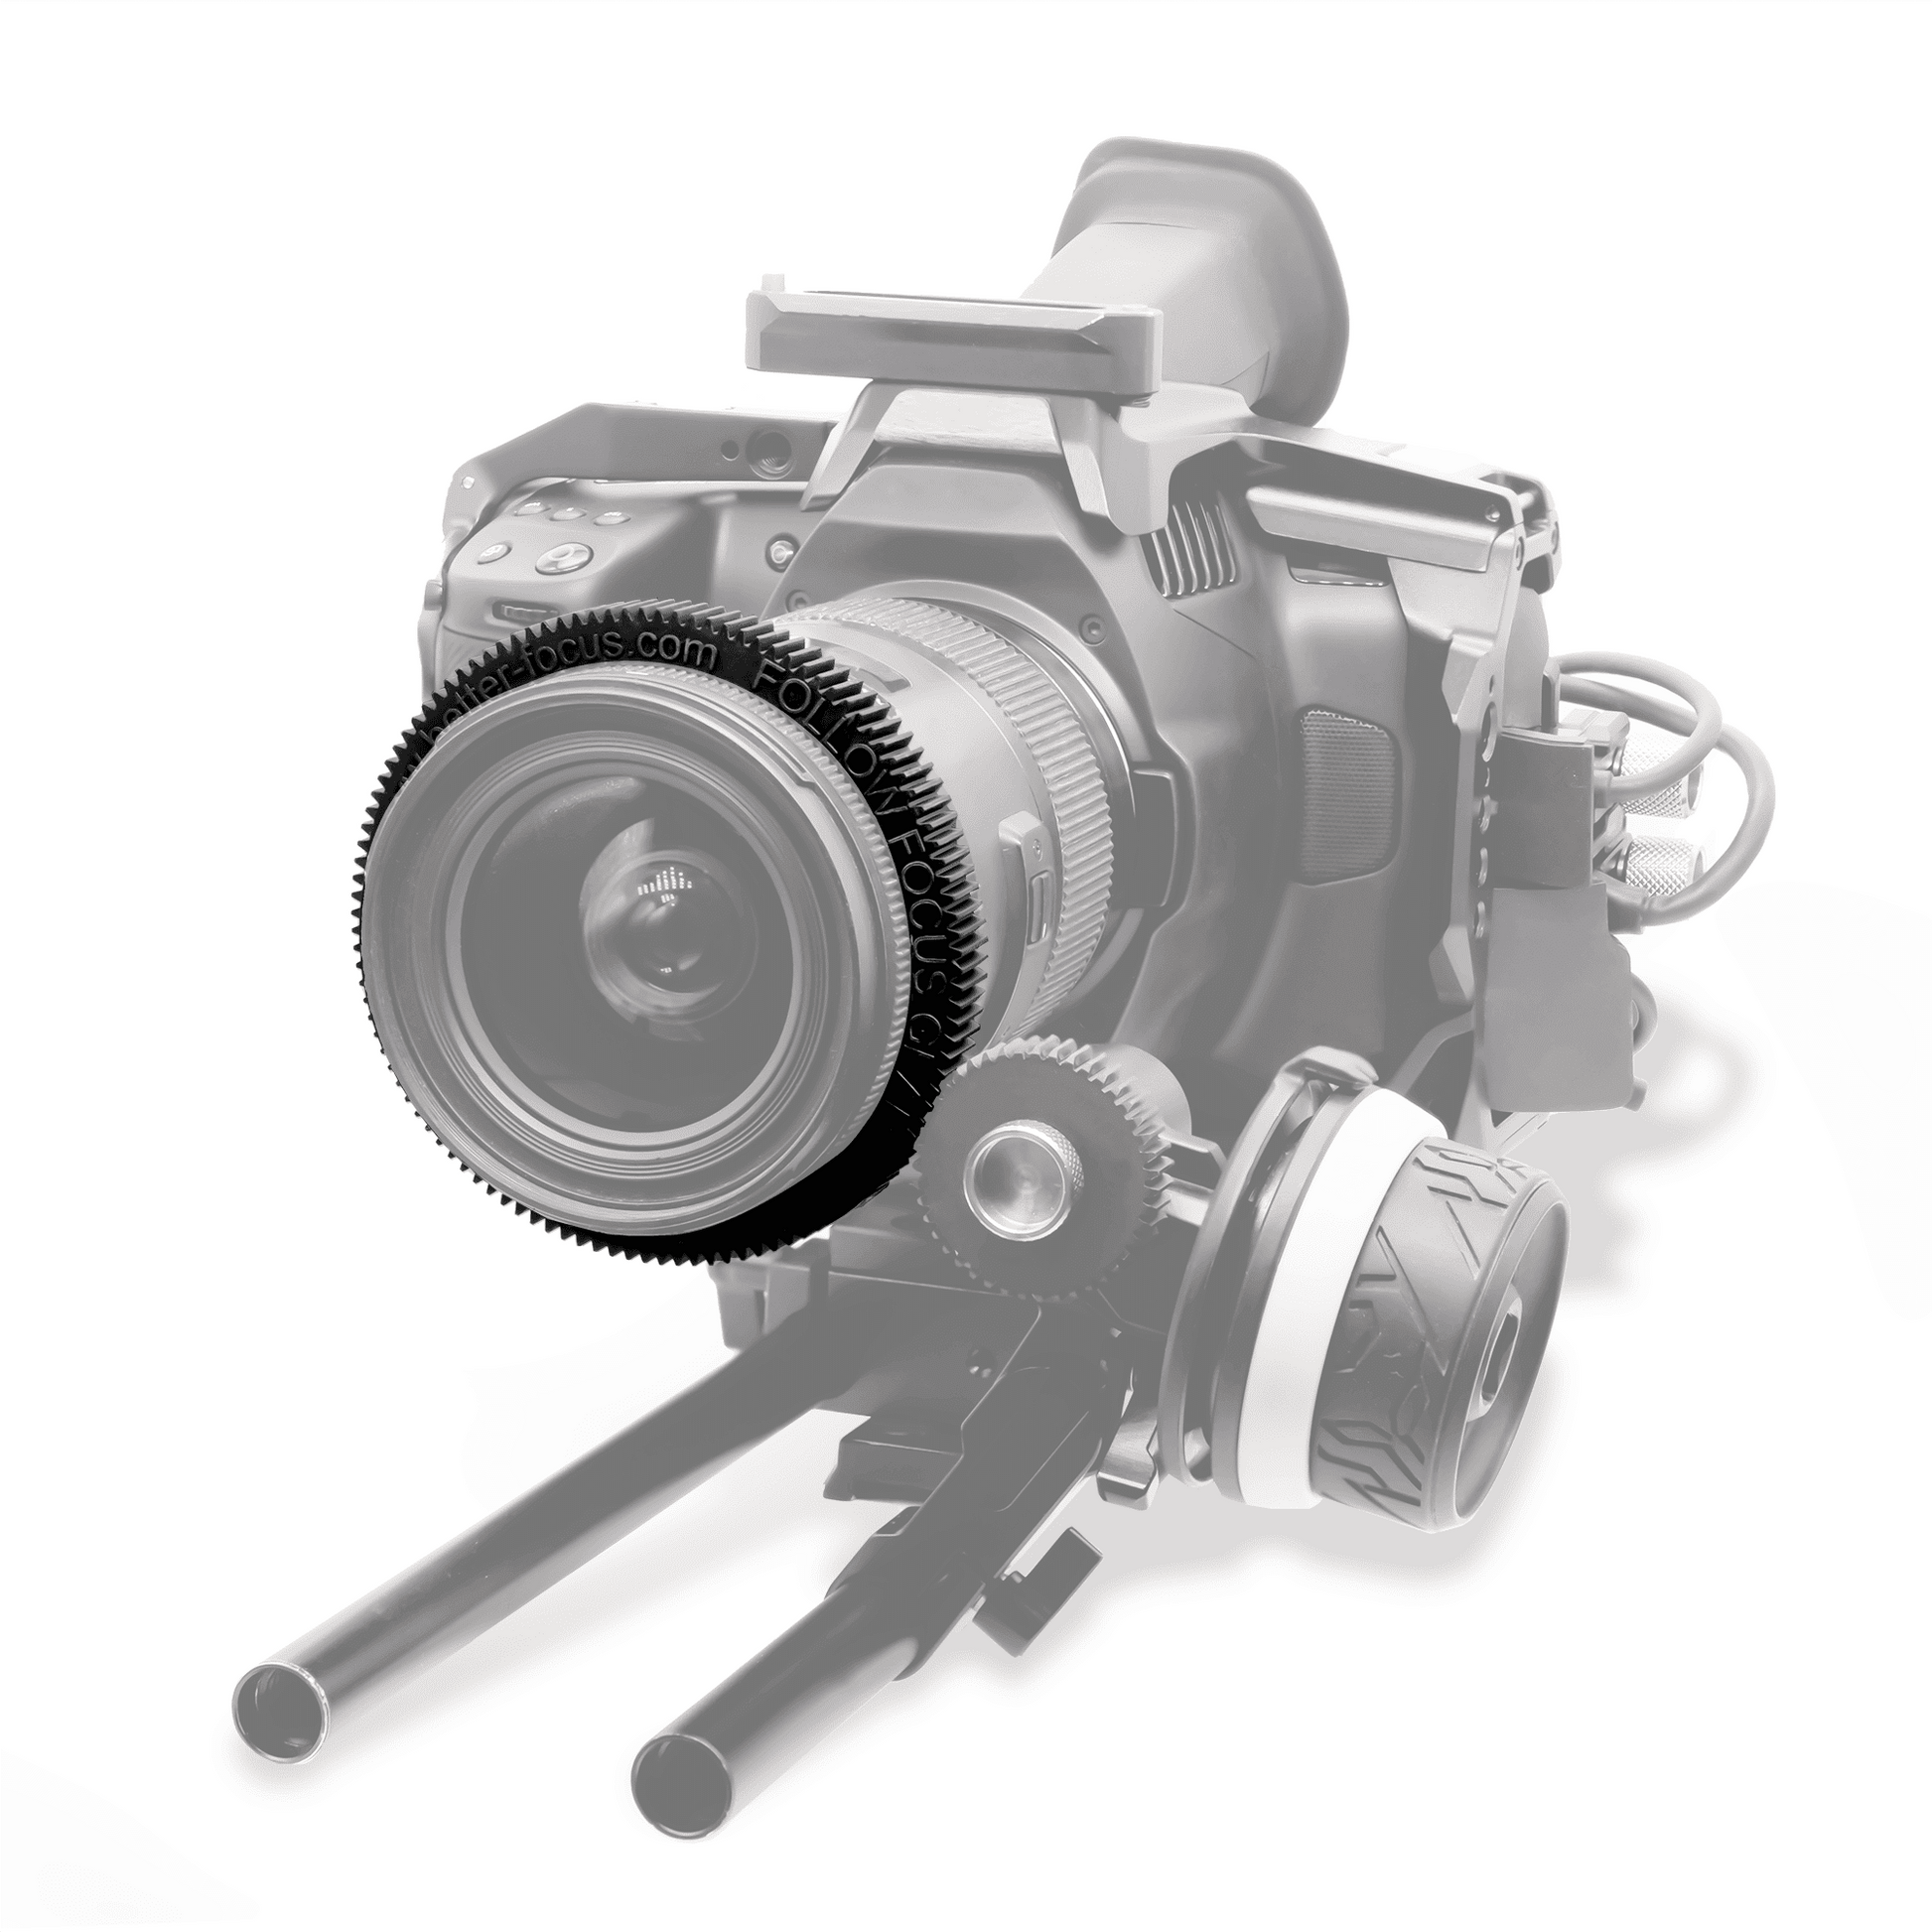 Perfect fitting Follow Focus Gear for LEICA 180MM F3.4 APO TELYT - R lens